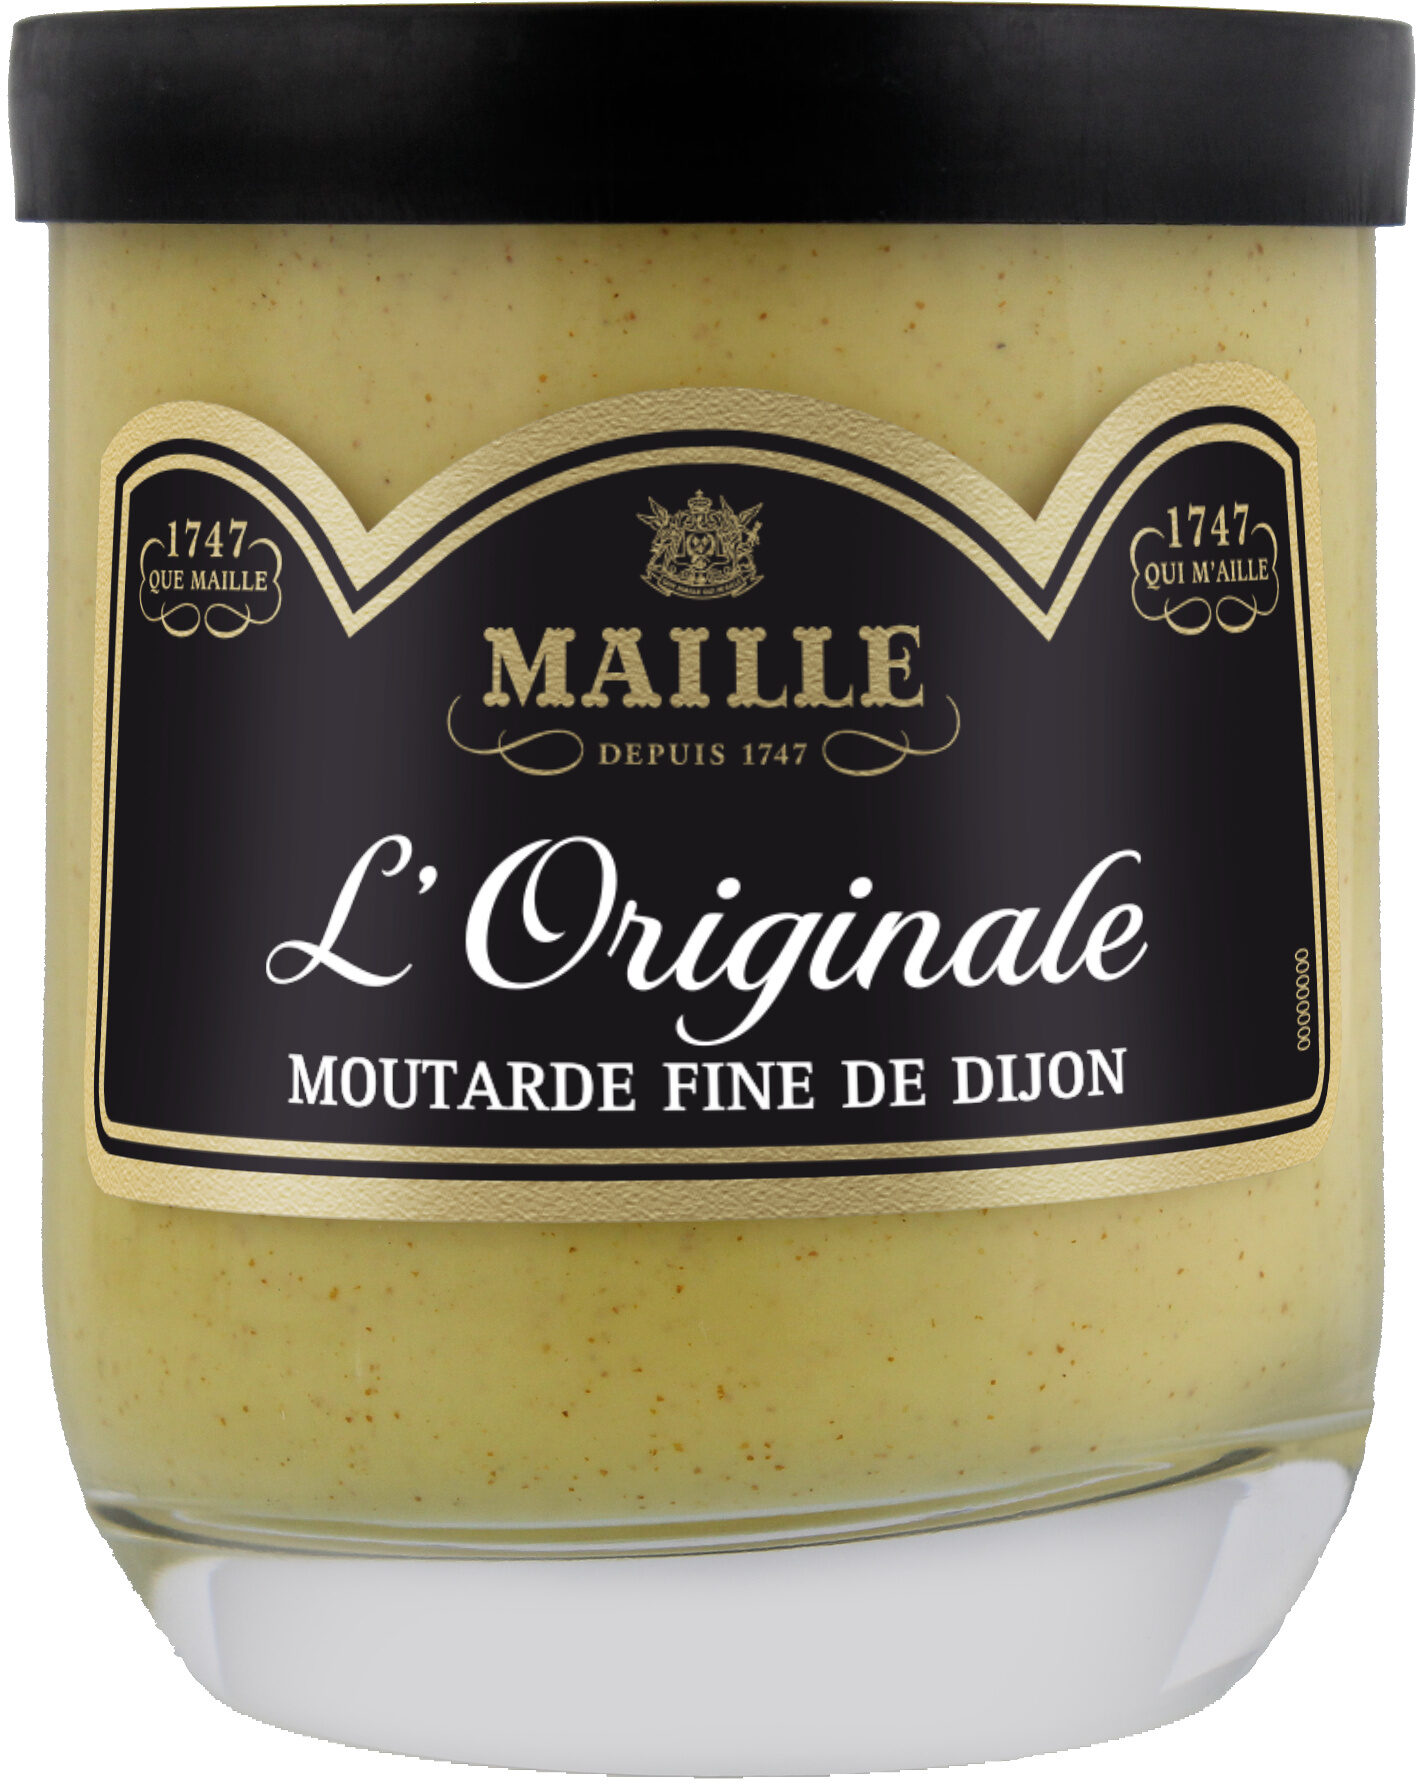 Maille Moutarde Fine De Dijon L'Originale Verrine 165g - Product - fr